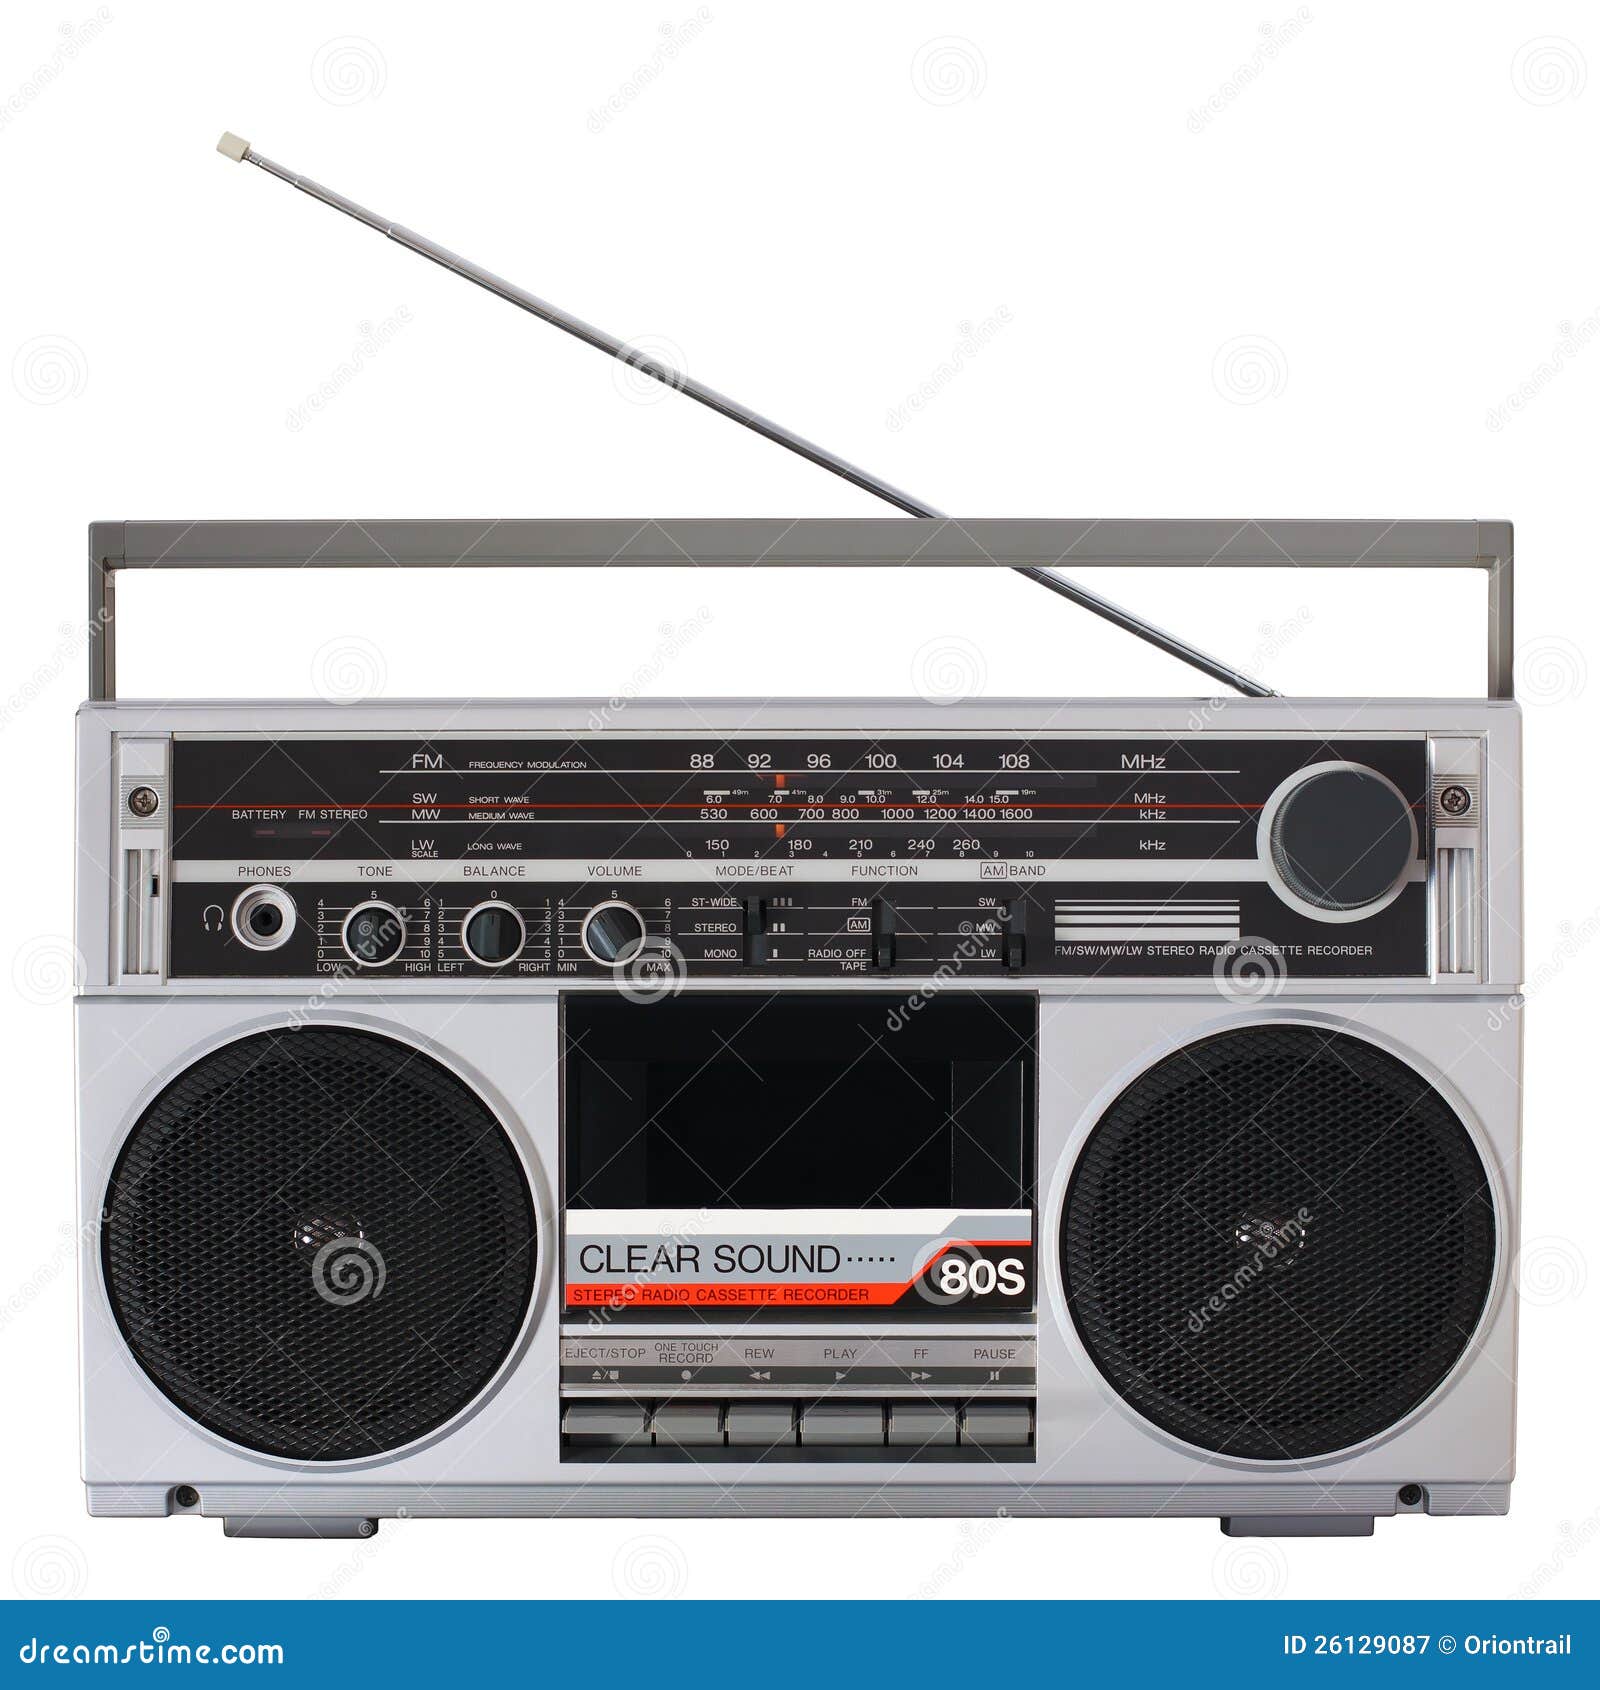 Retro Radio Cassette Player Stock Image - Image of player, music